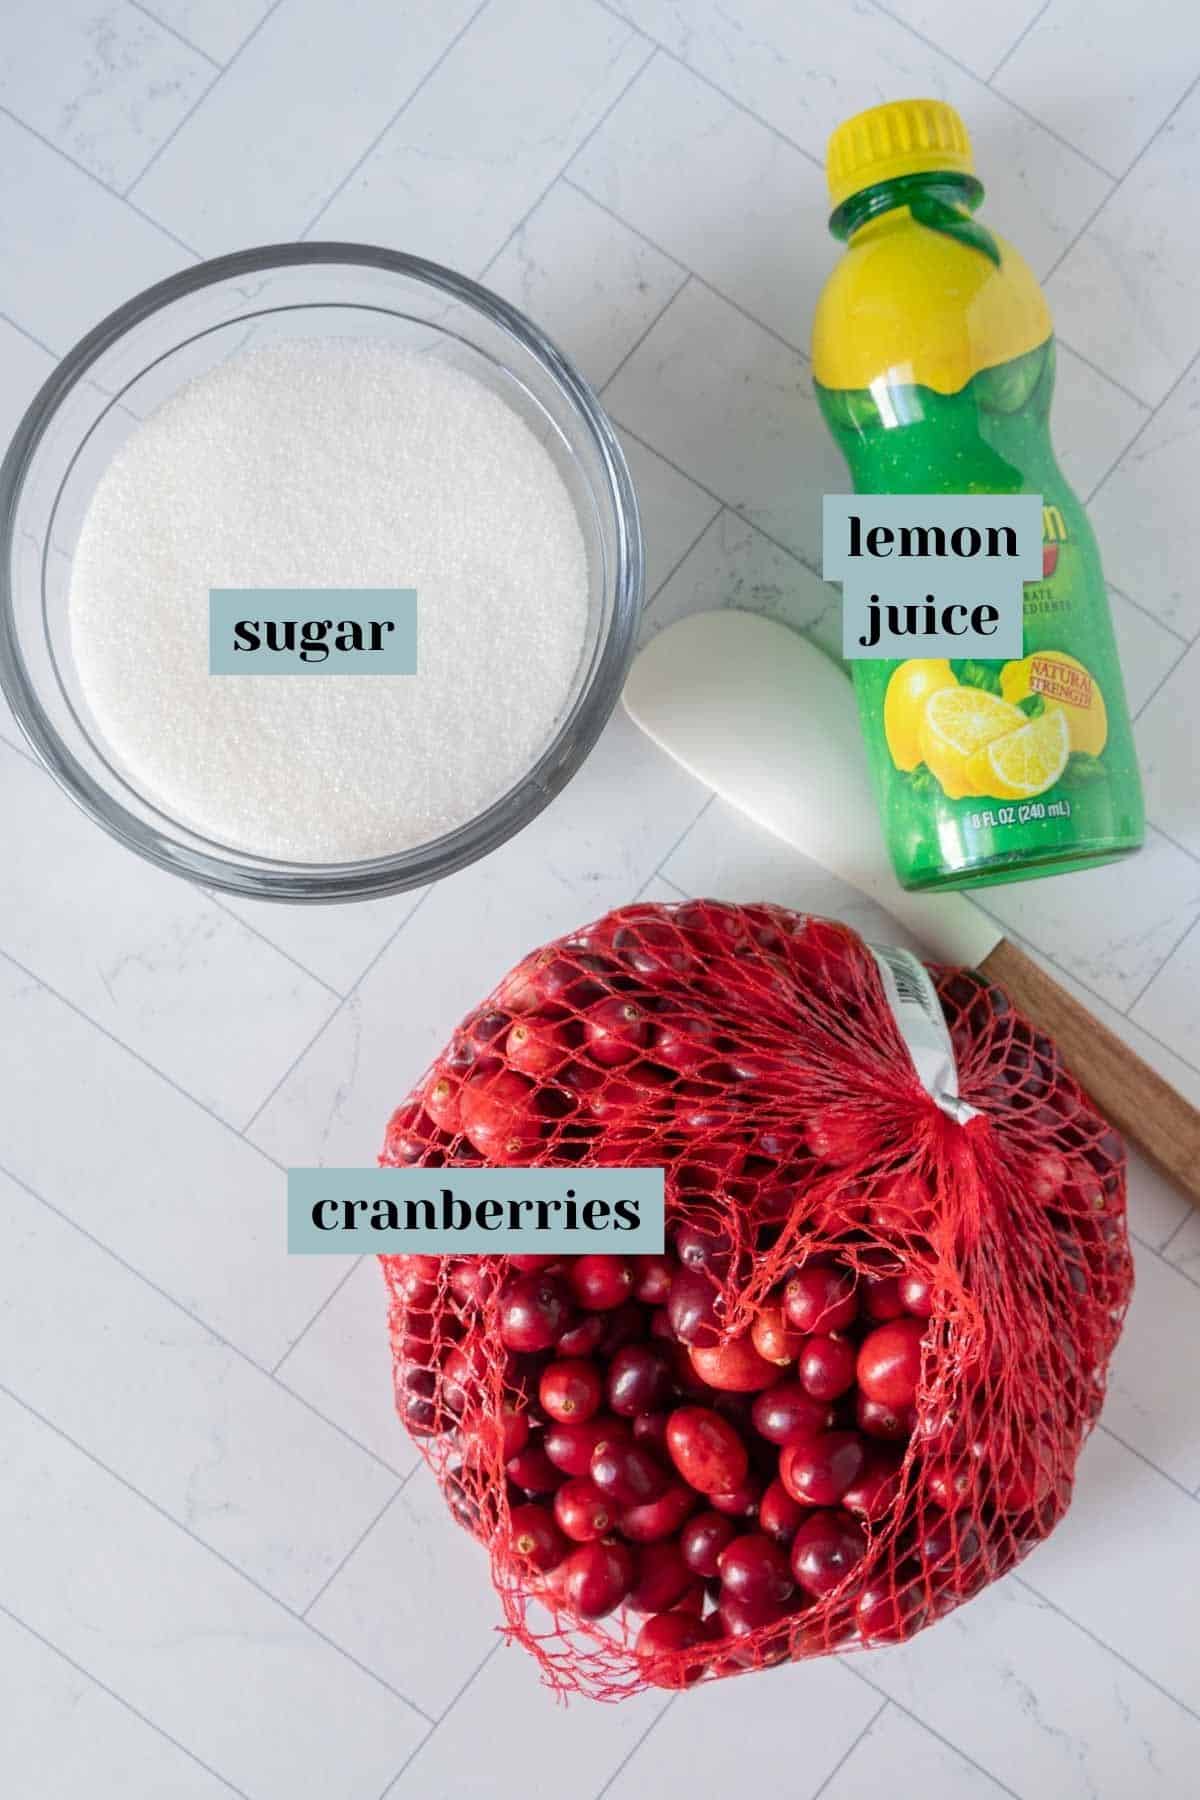 Cranberries, sugar, lemon juice, and sugar on a counter.